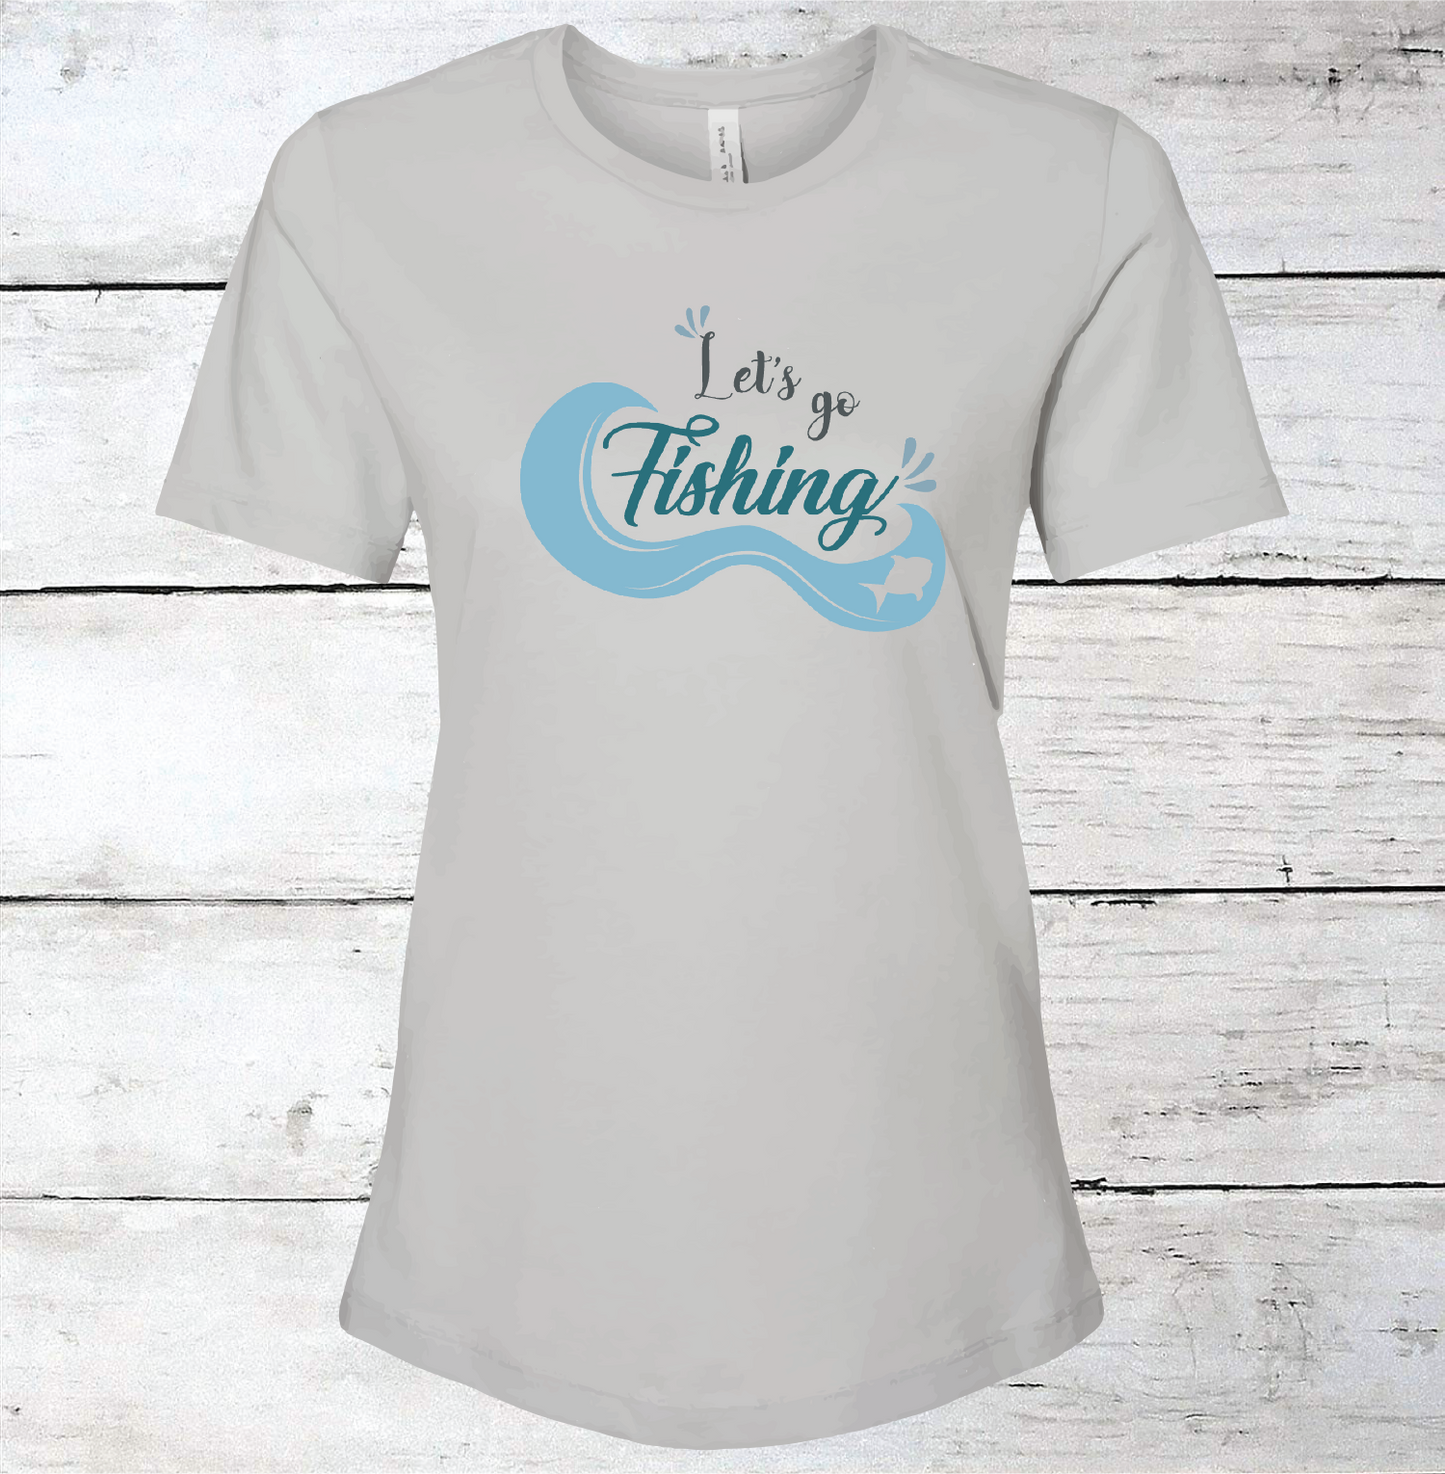 Let's Go Fishing T-Shirt